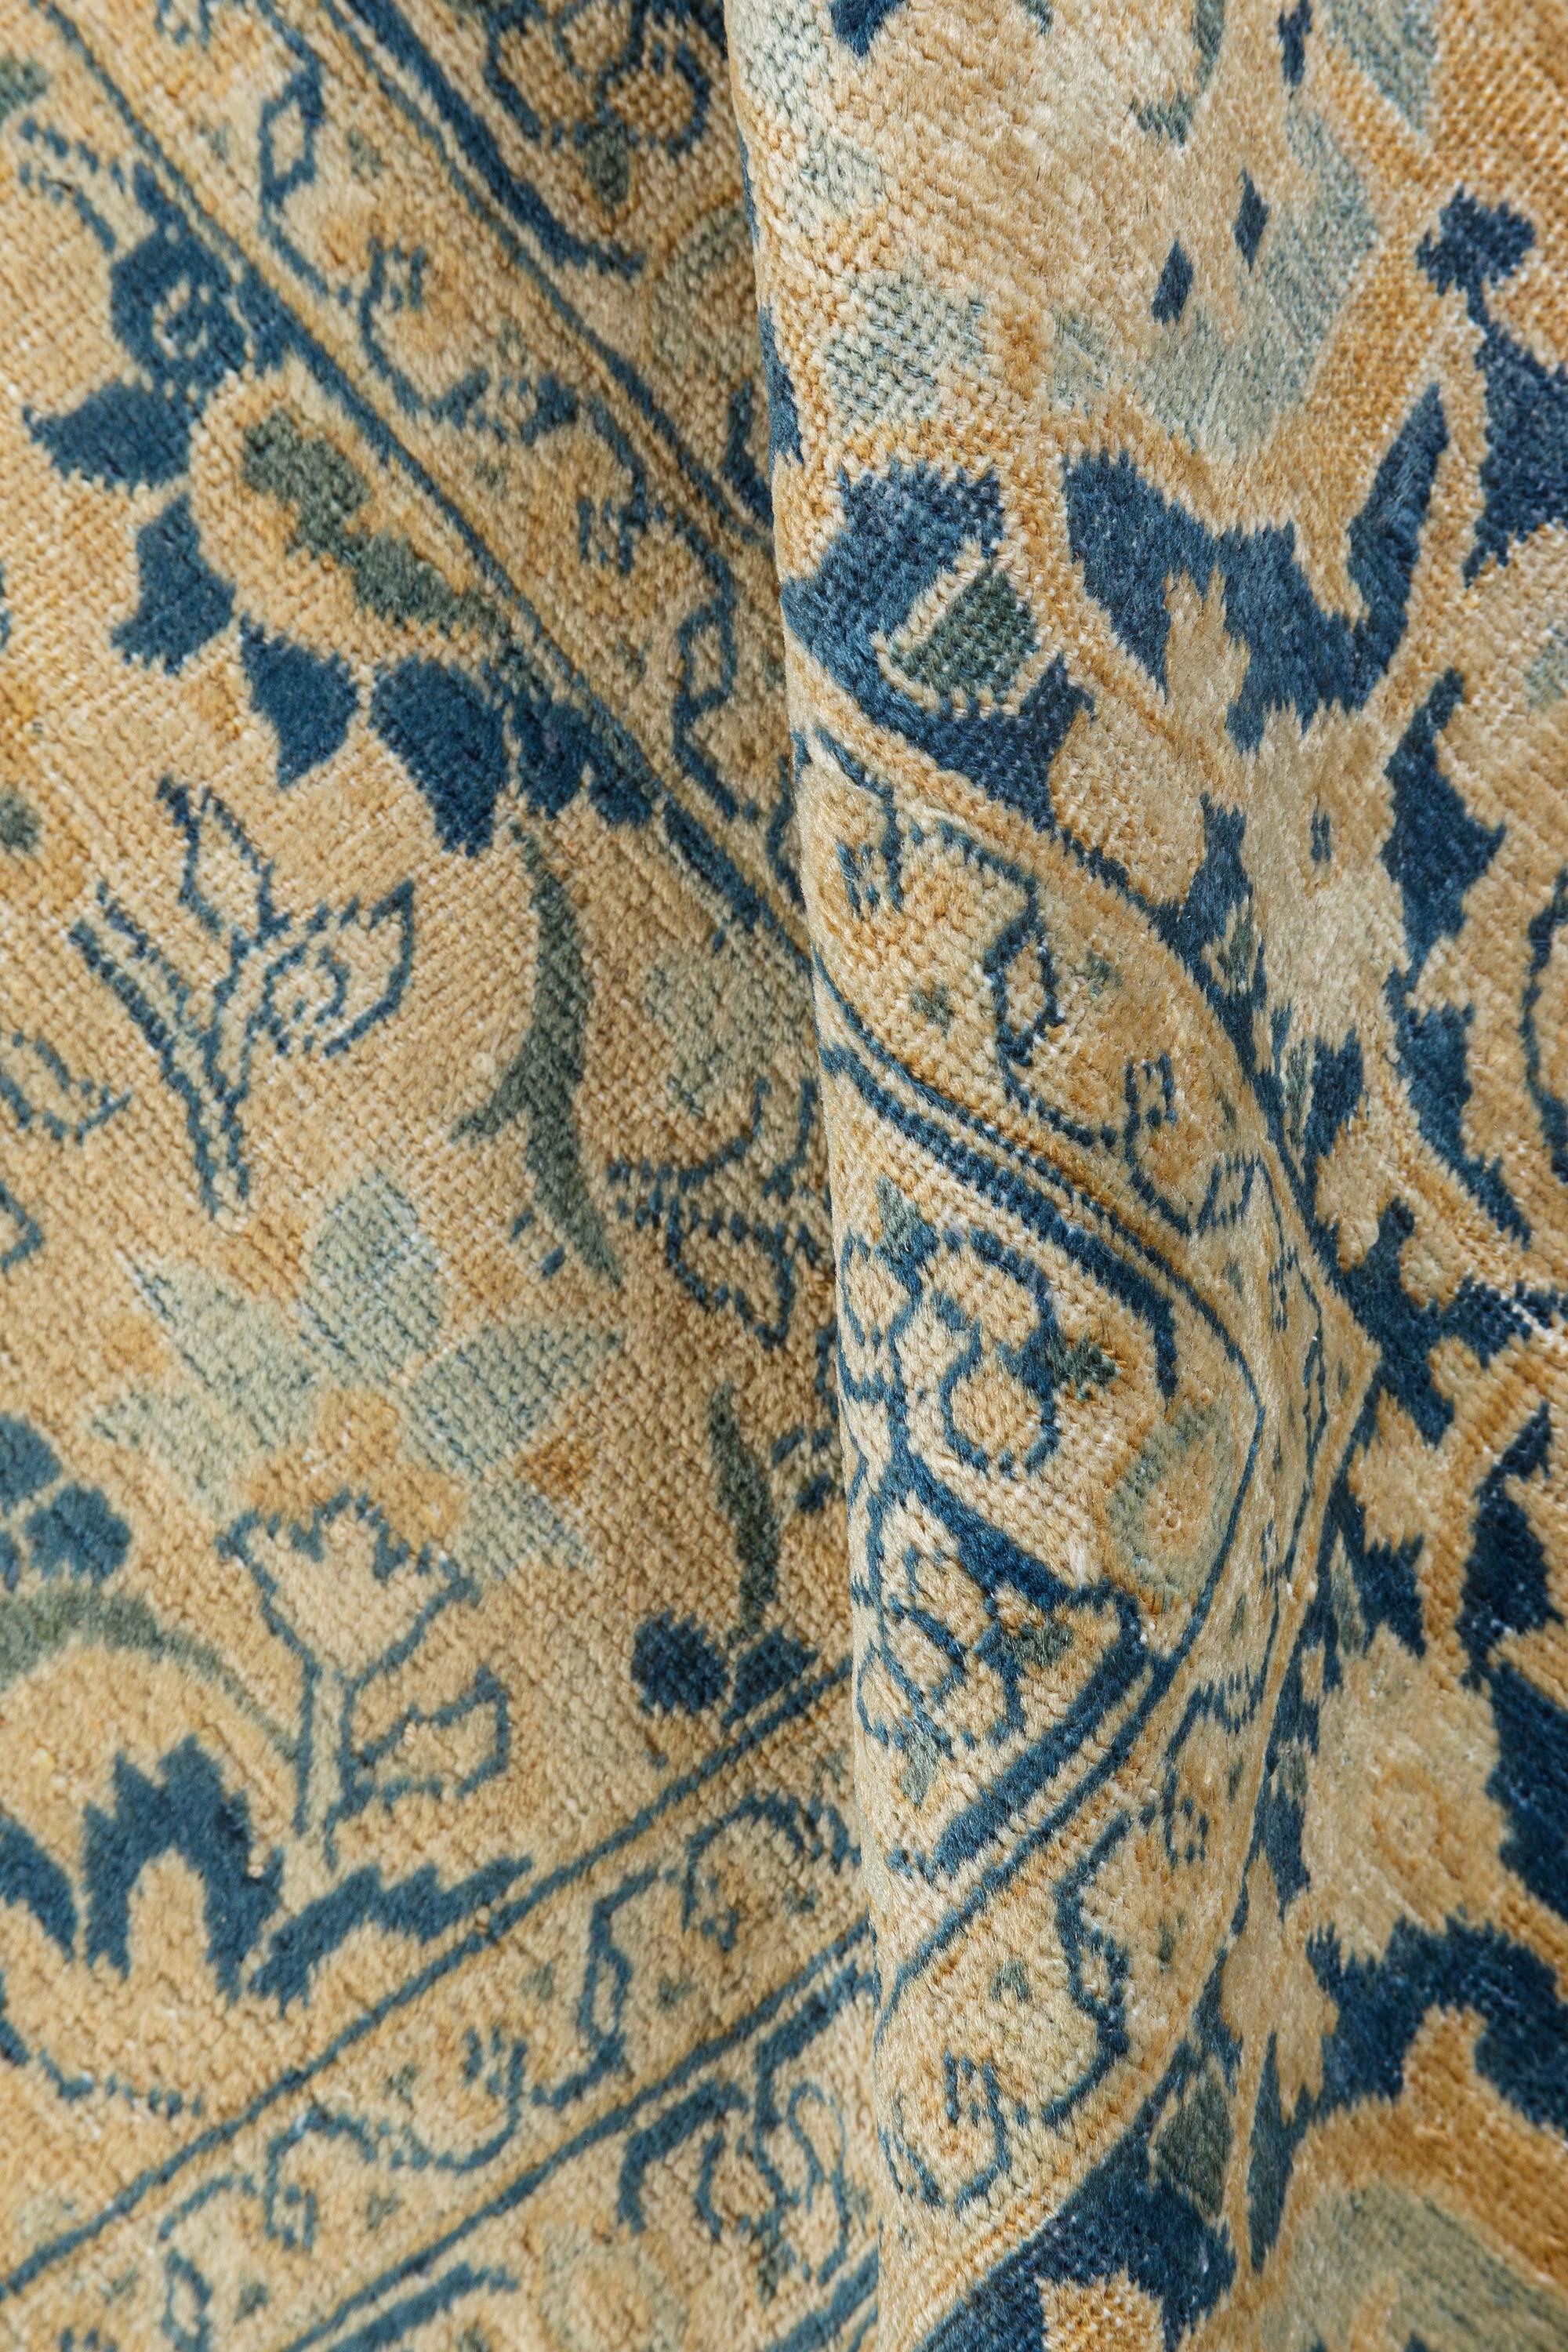 Early 20th century Persian Tabriz handmade wool rug.
Size: 11'0